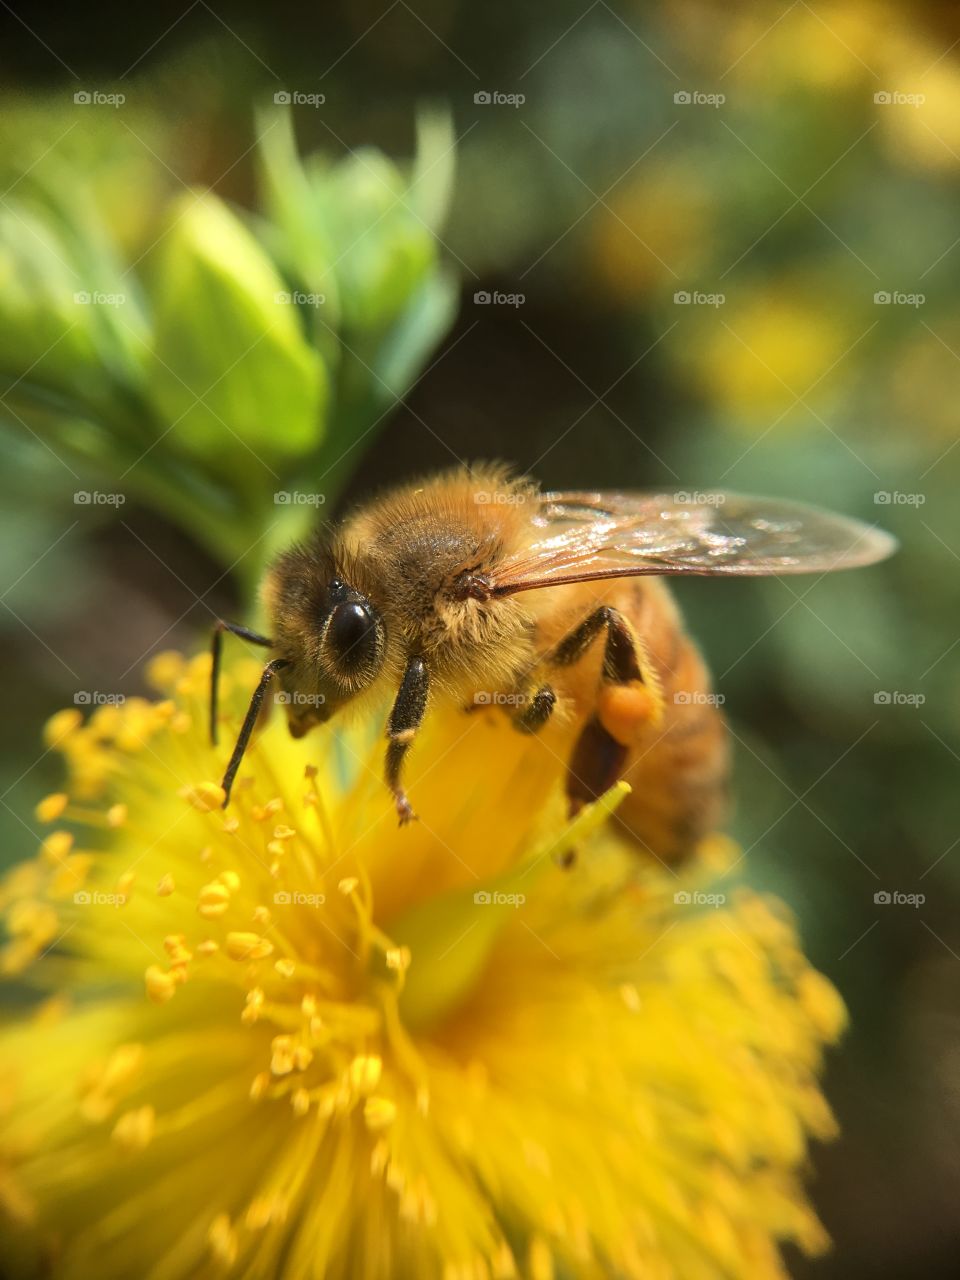 Honeybee on yellow flower